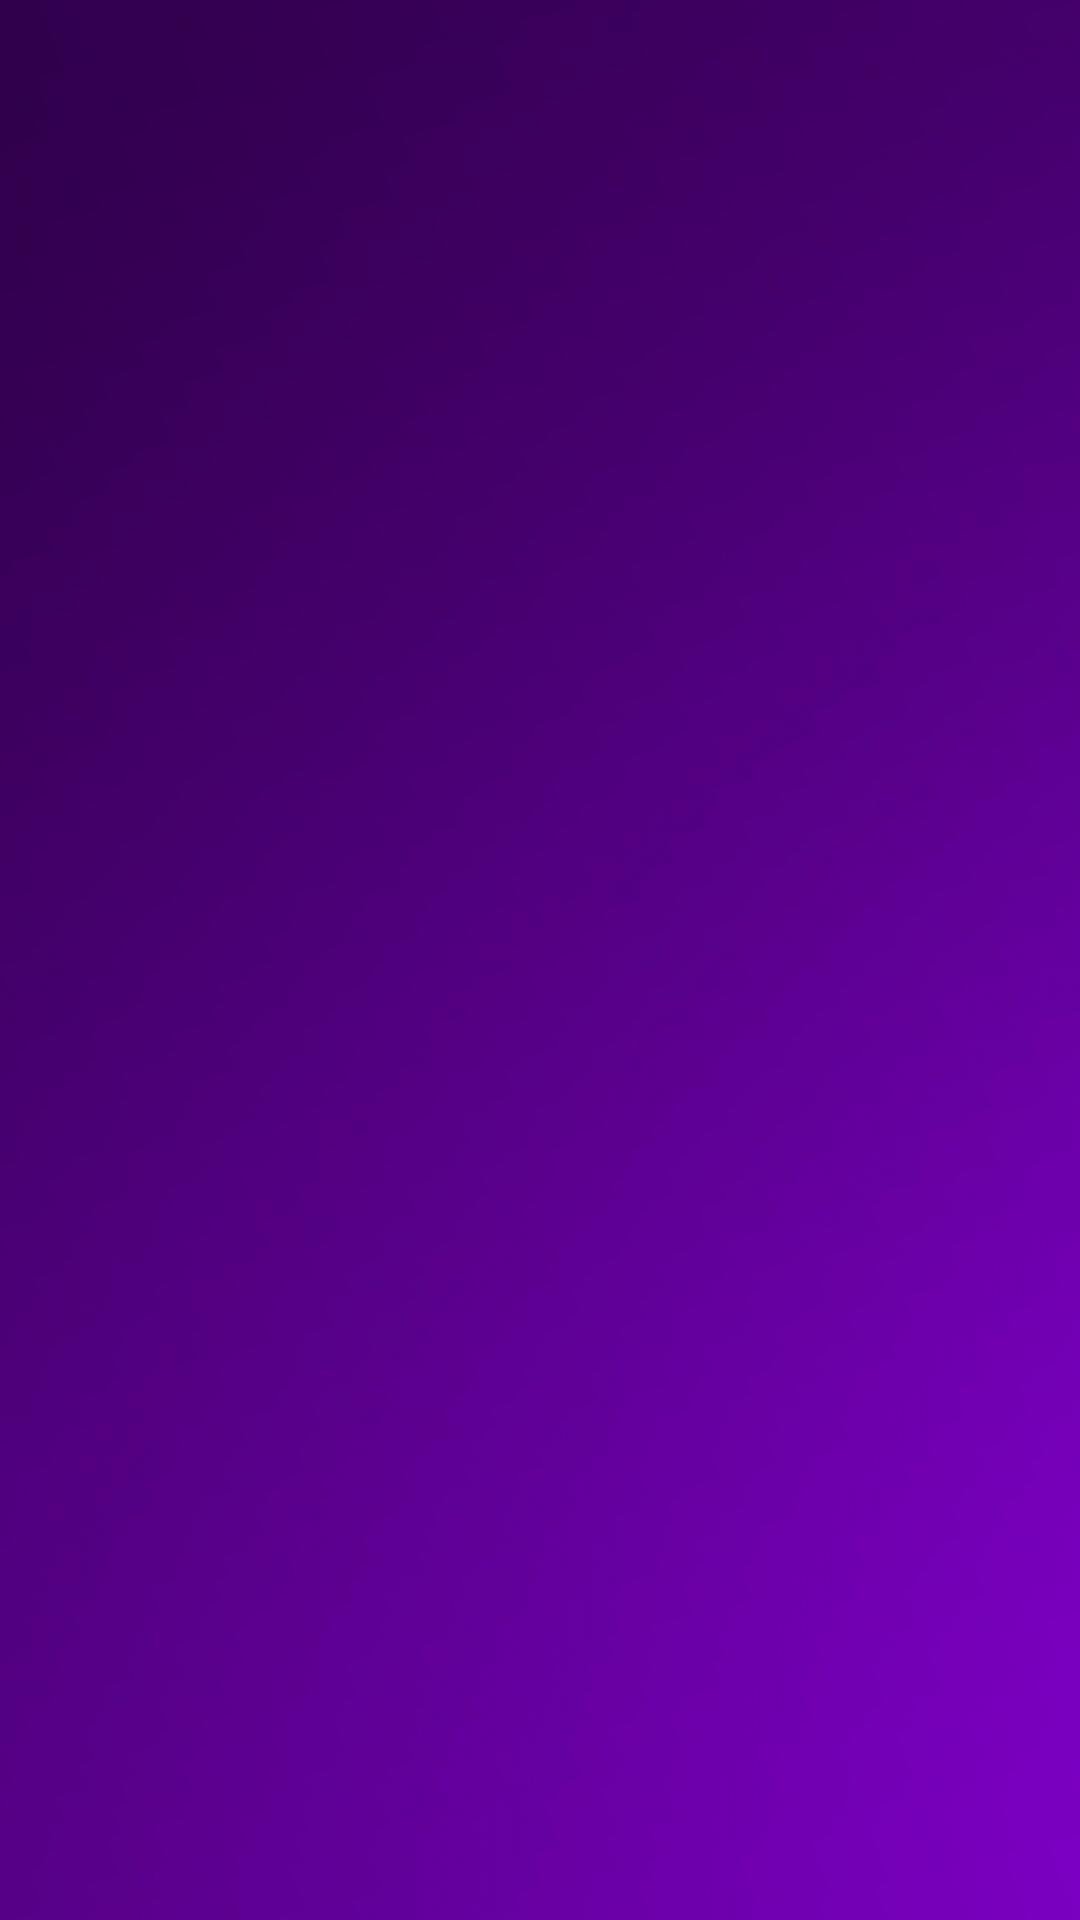 Plain Purple Background Images  Free Download on Freepik